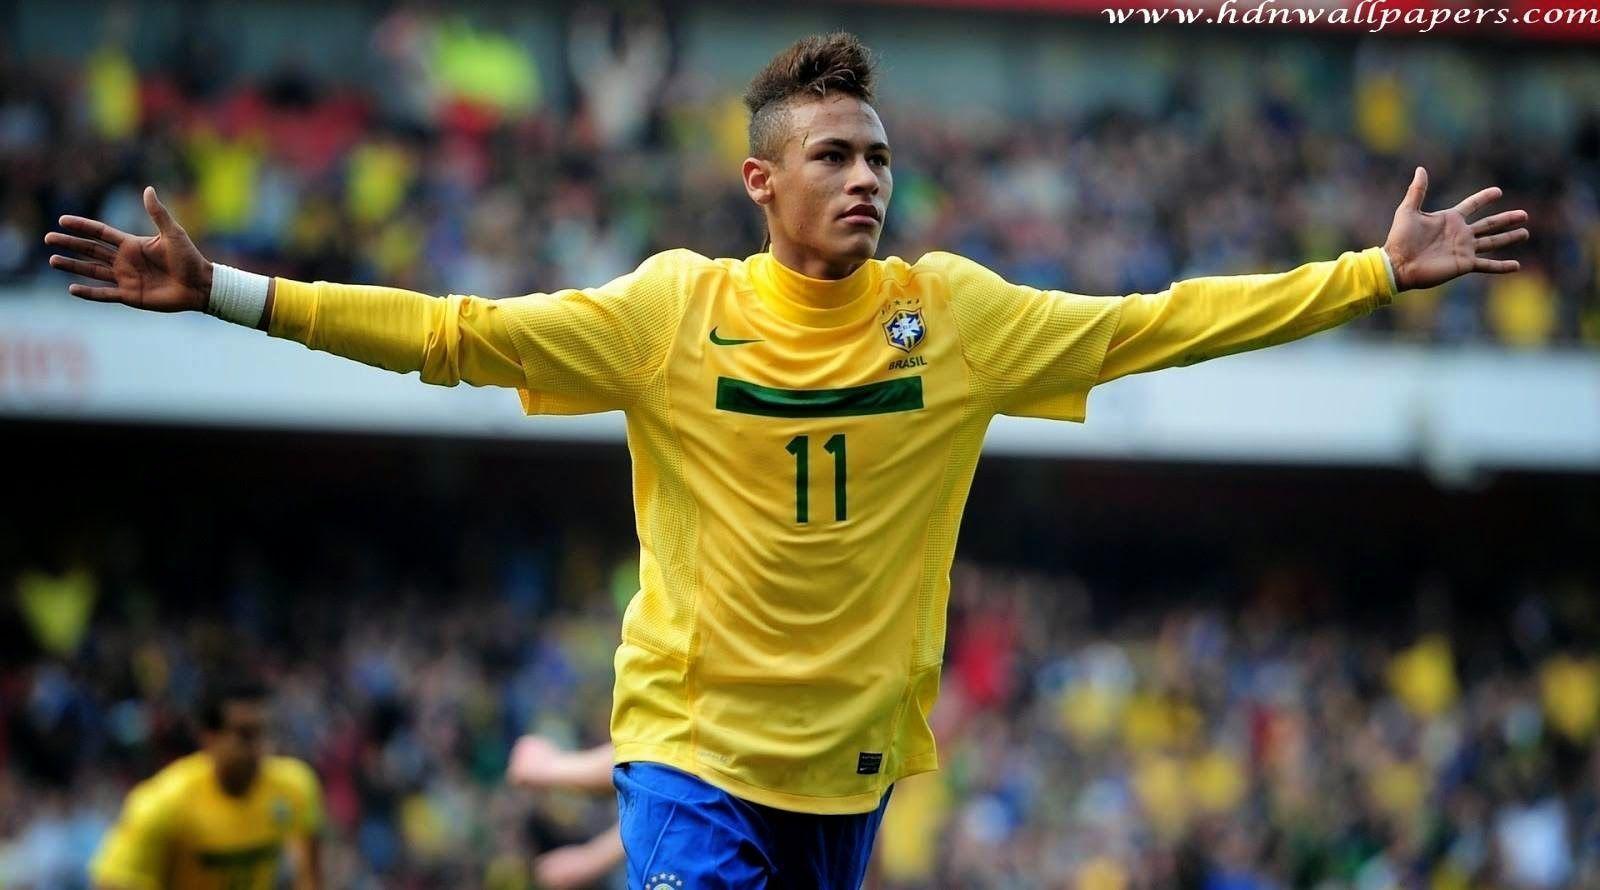 Wallpapers Club 2014: Neymar Goal Celebration Wallpapers Free Download